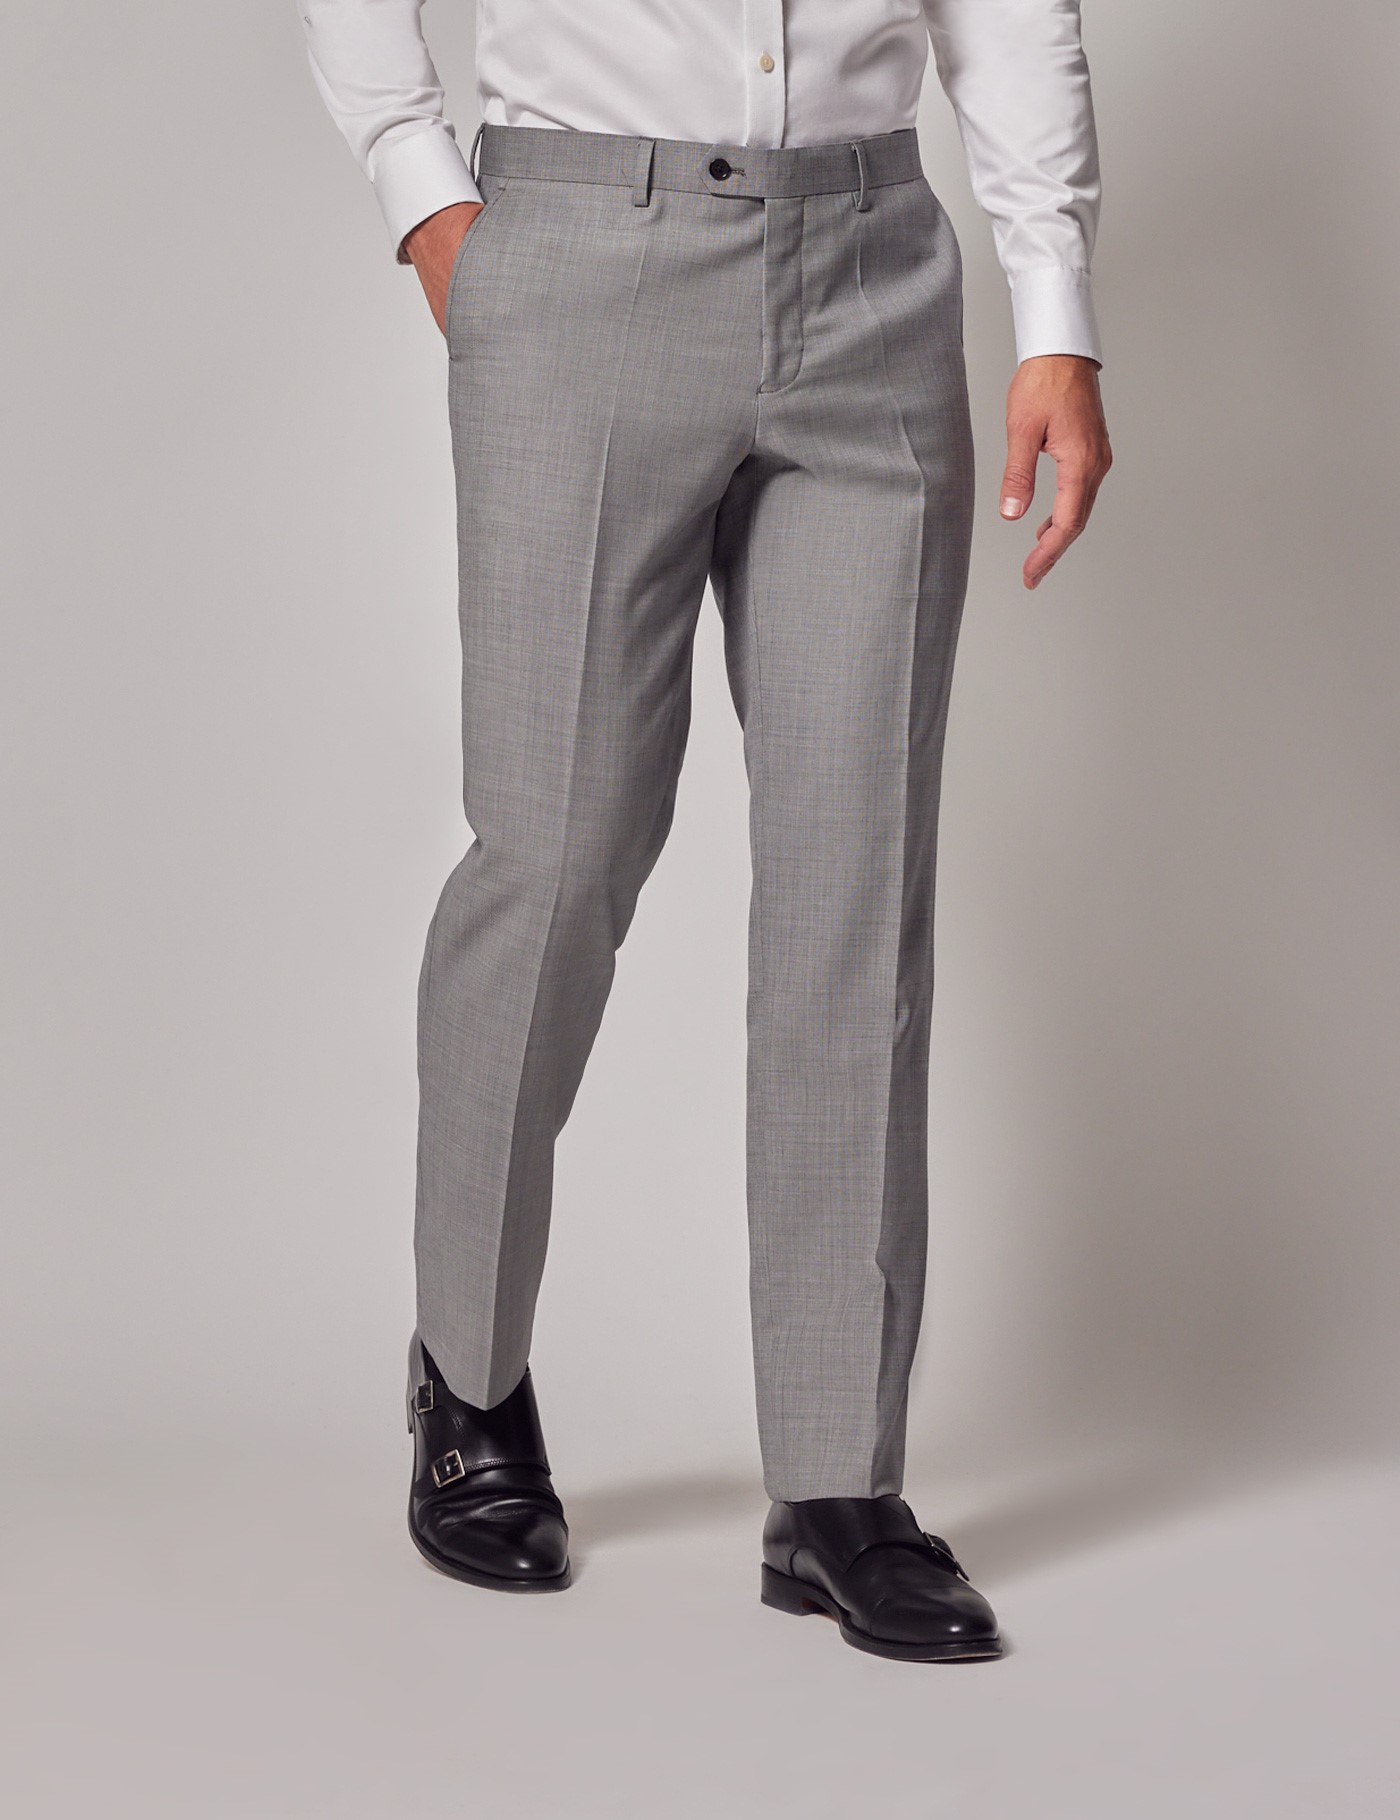 light grey dress pants